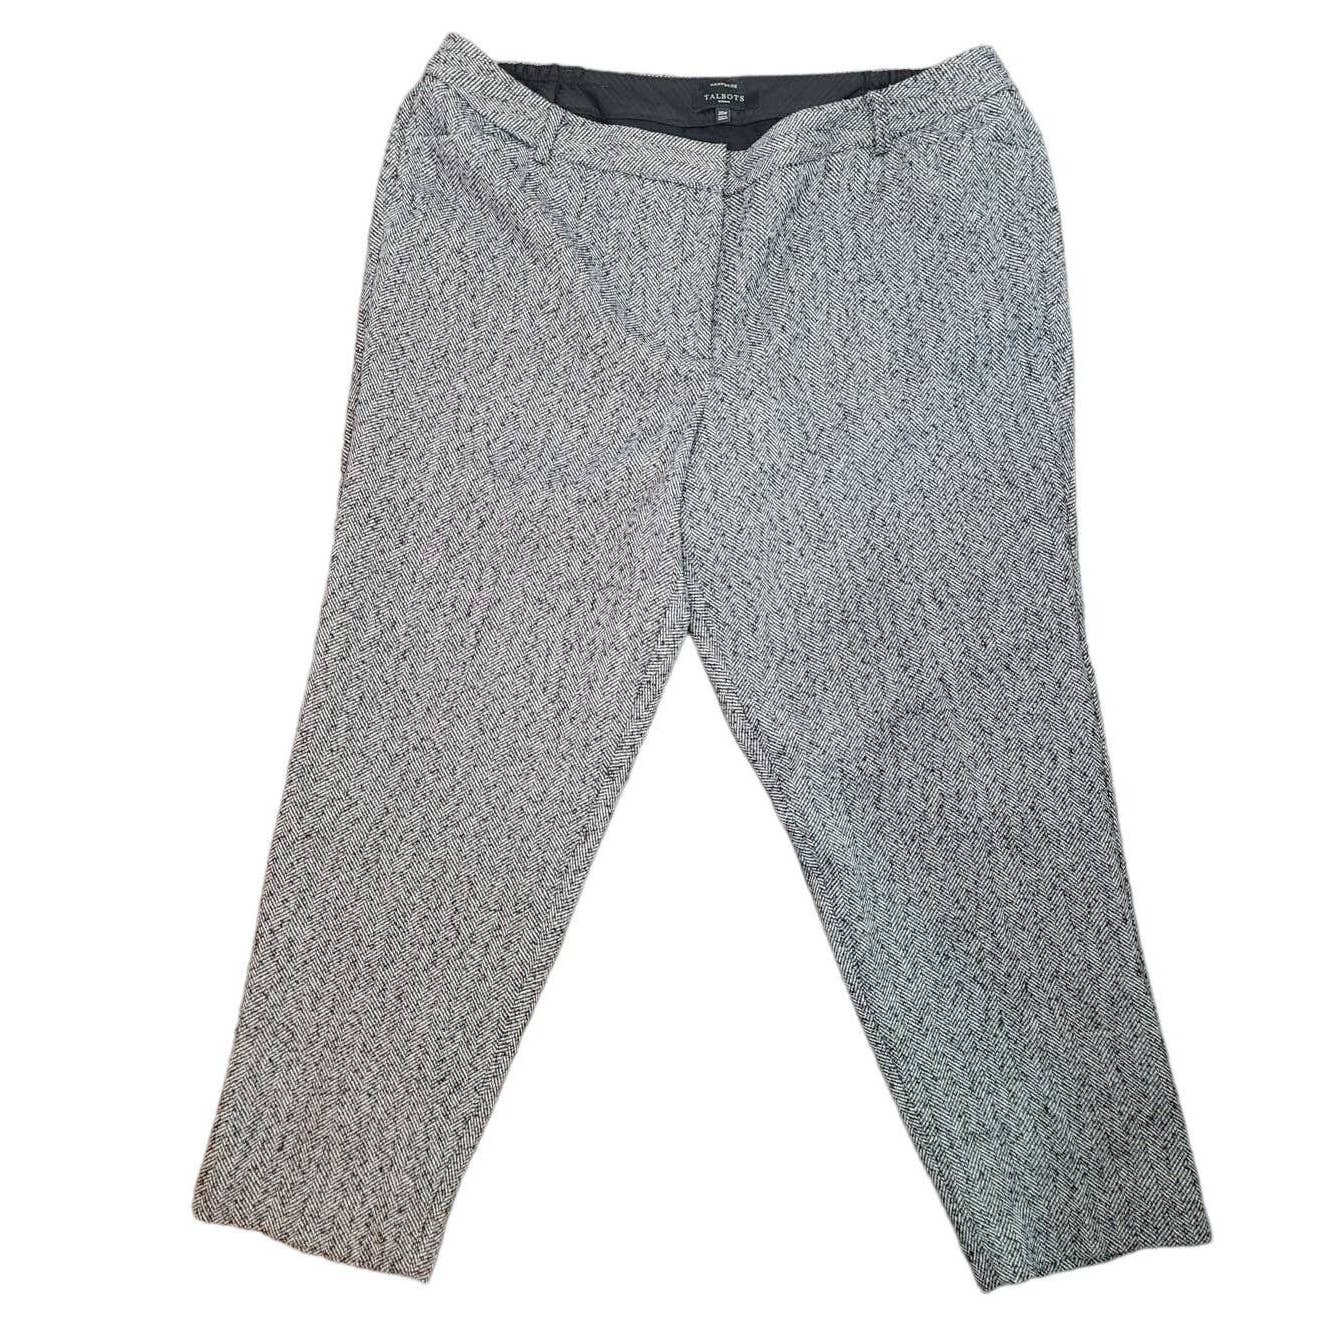 Talbots Grey Chino Work Pants Hampshire Herringbone Wool Plus Size 20W